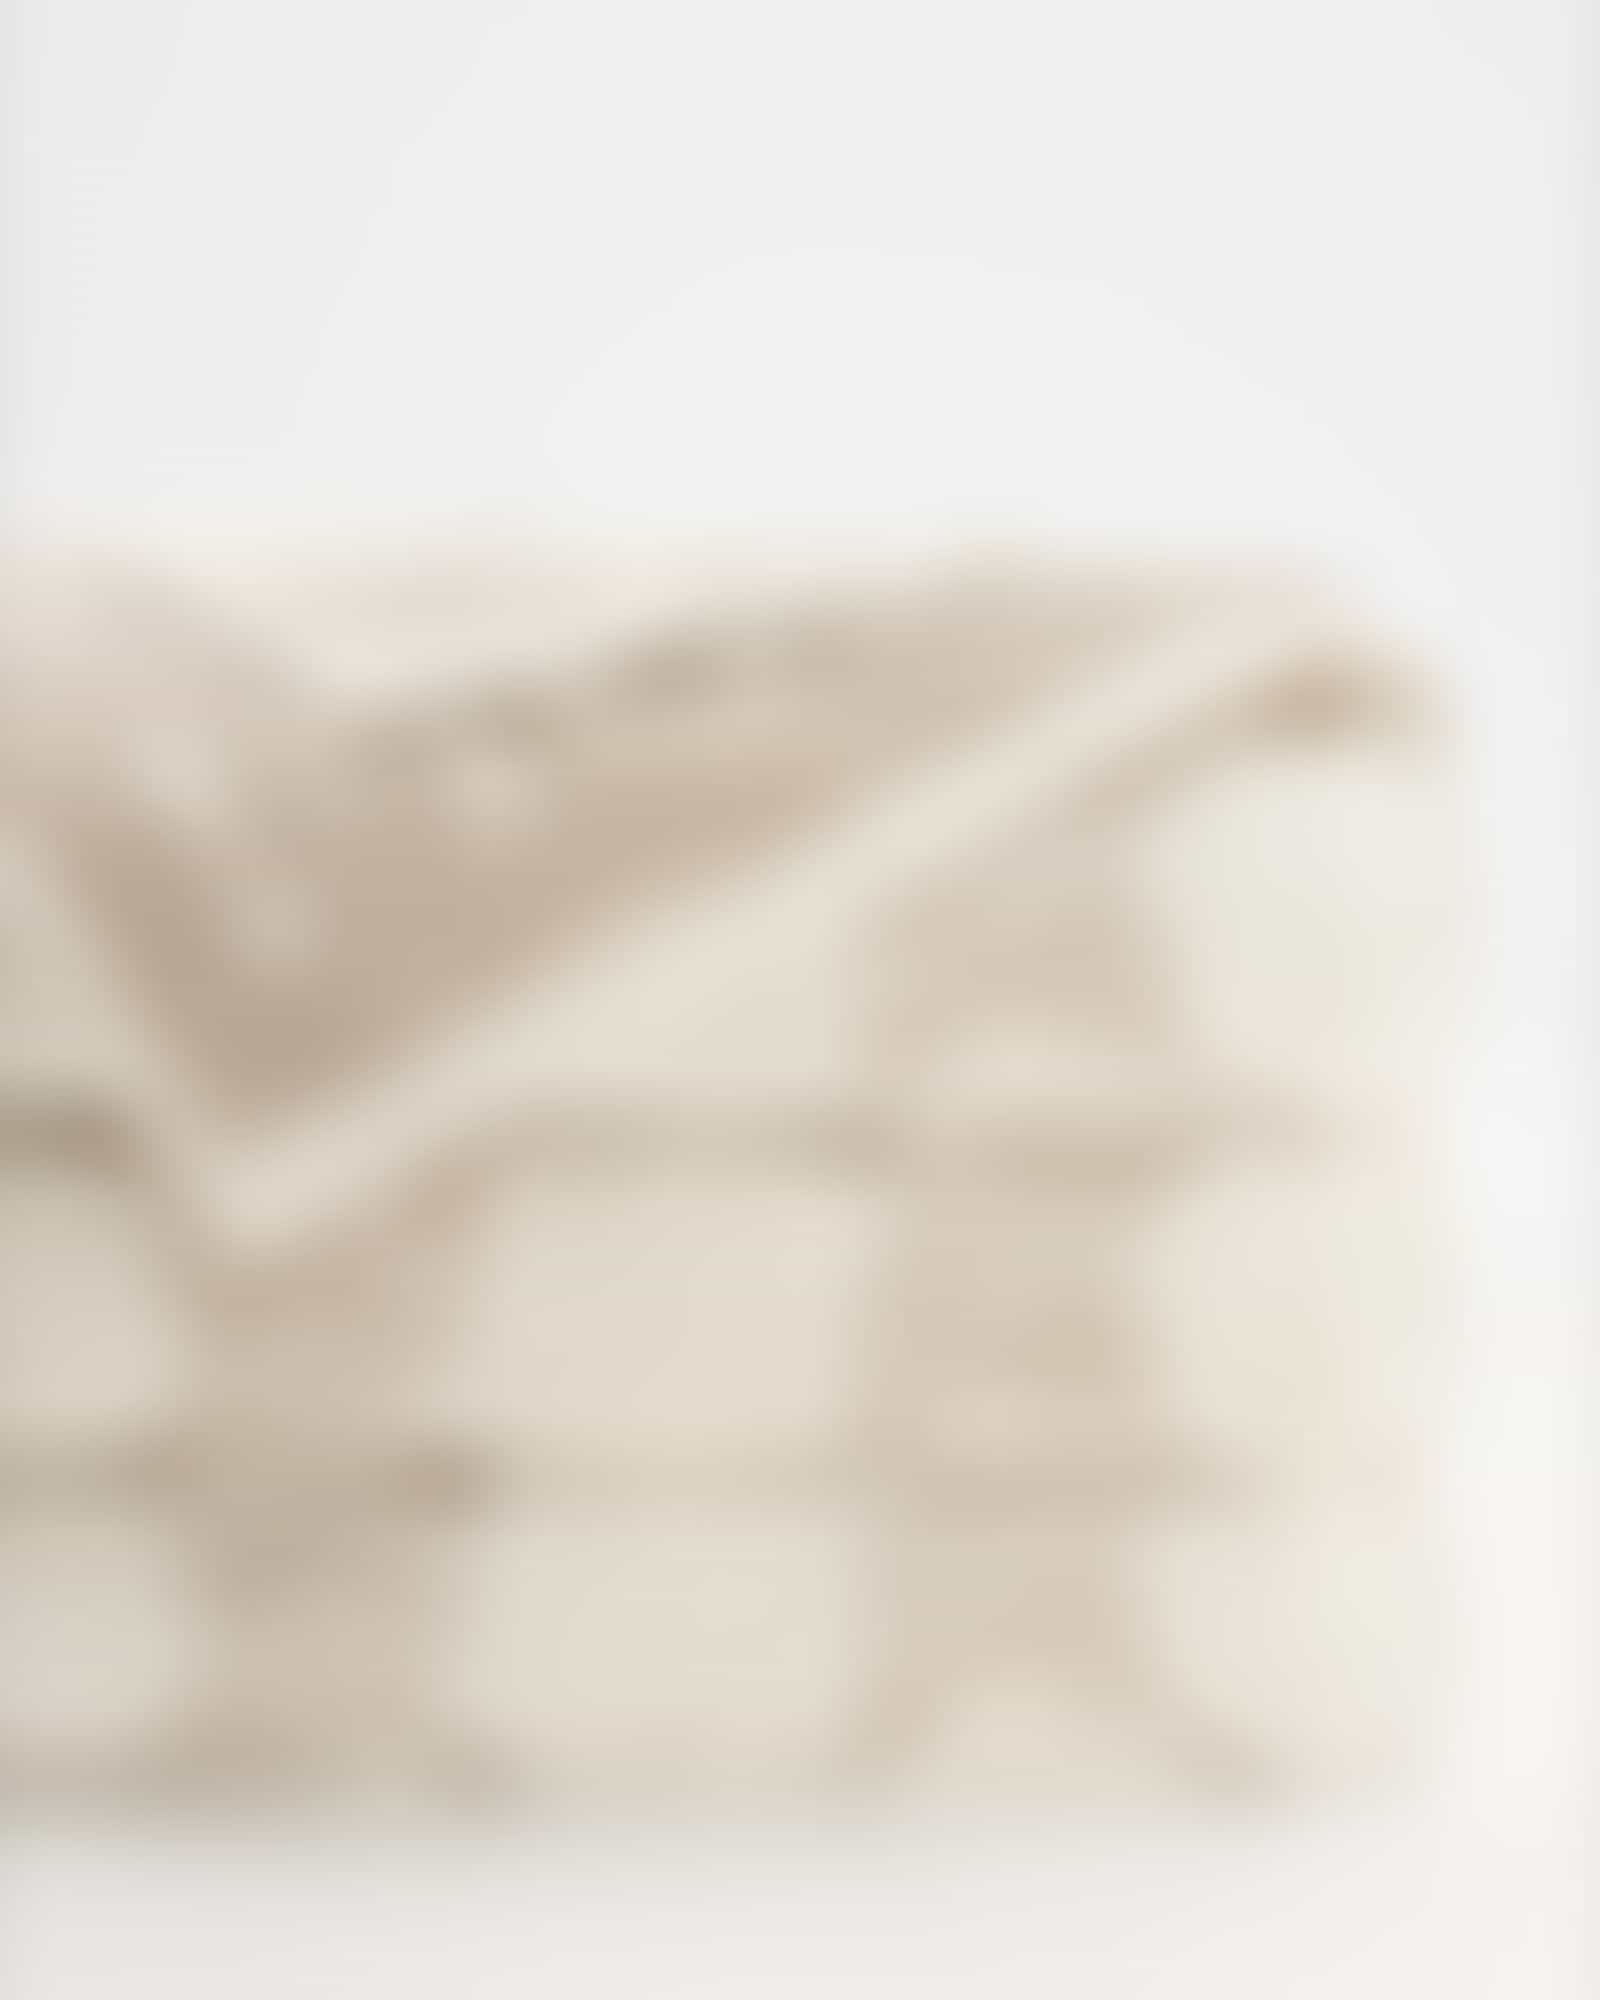 JOOP! Classic - Cornflower 1611 - Farbe: Creme - 36 - Duschtuch 80x150 cm Detailbild 2